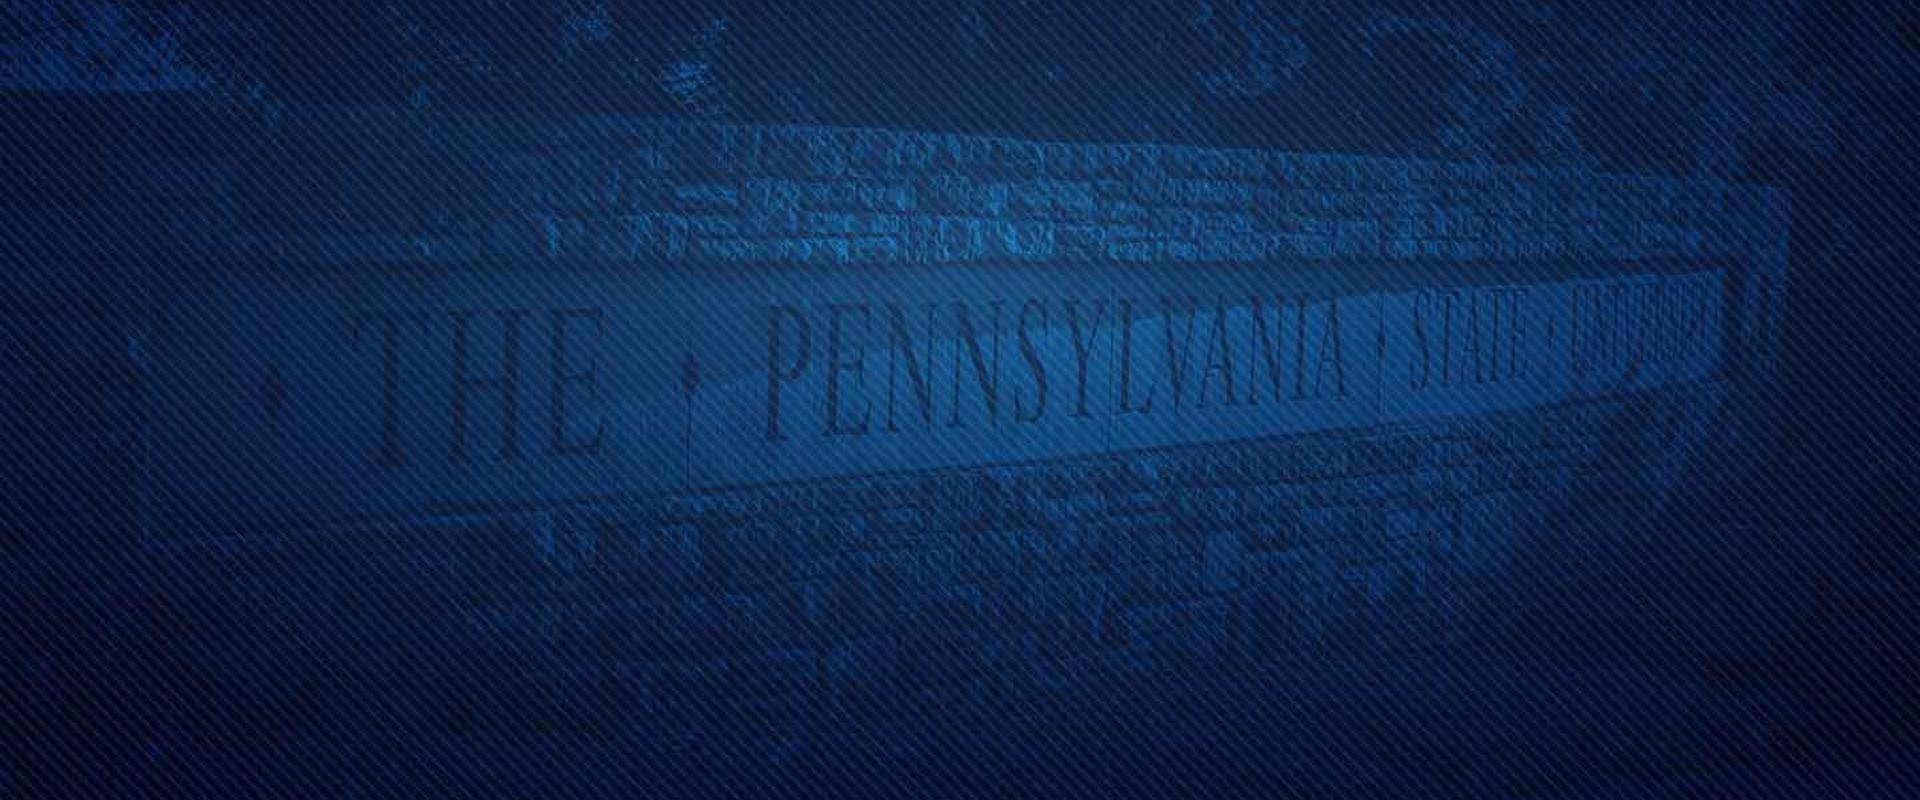 Penn State University rock wall sign